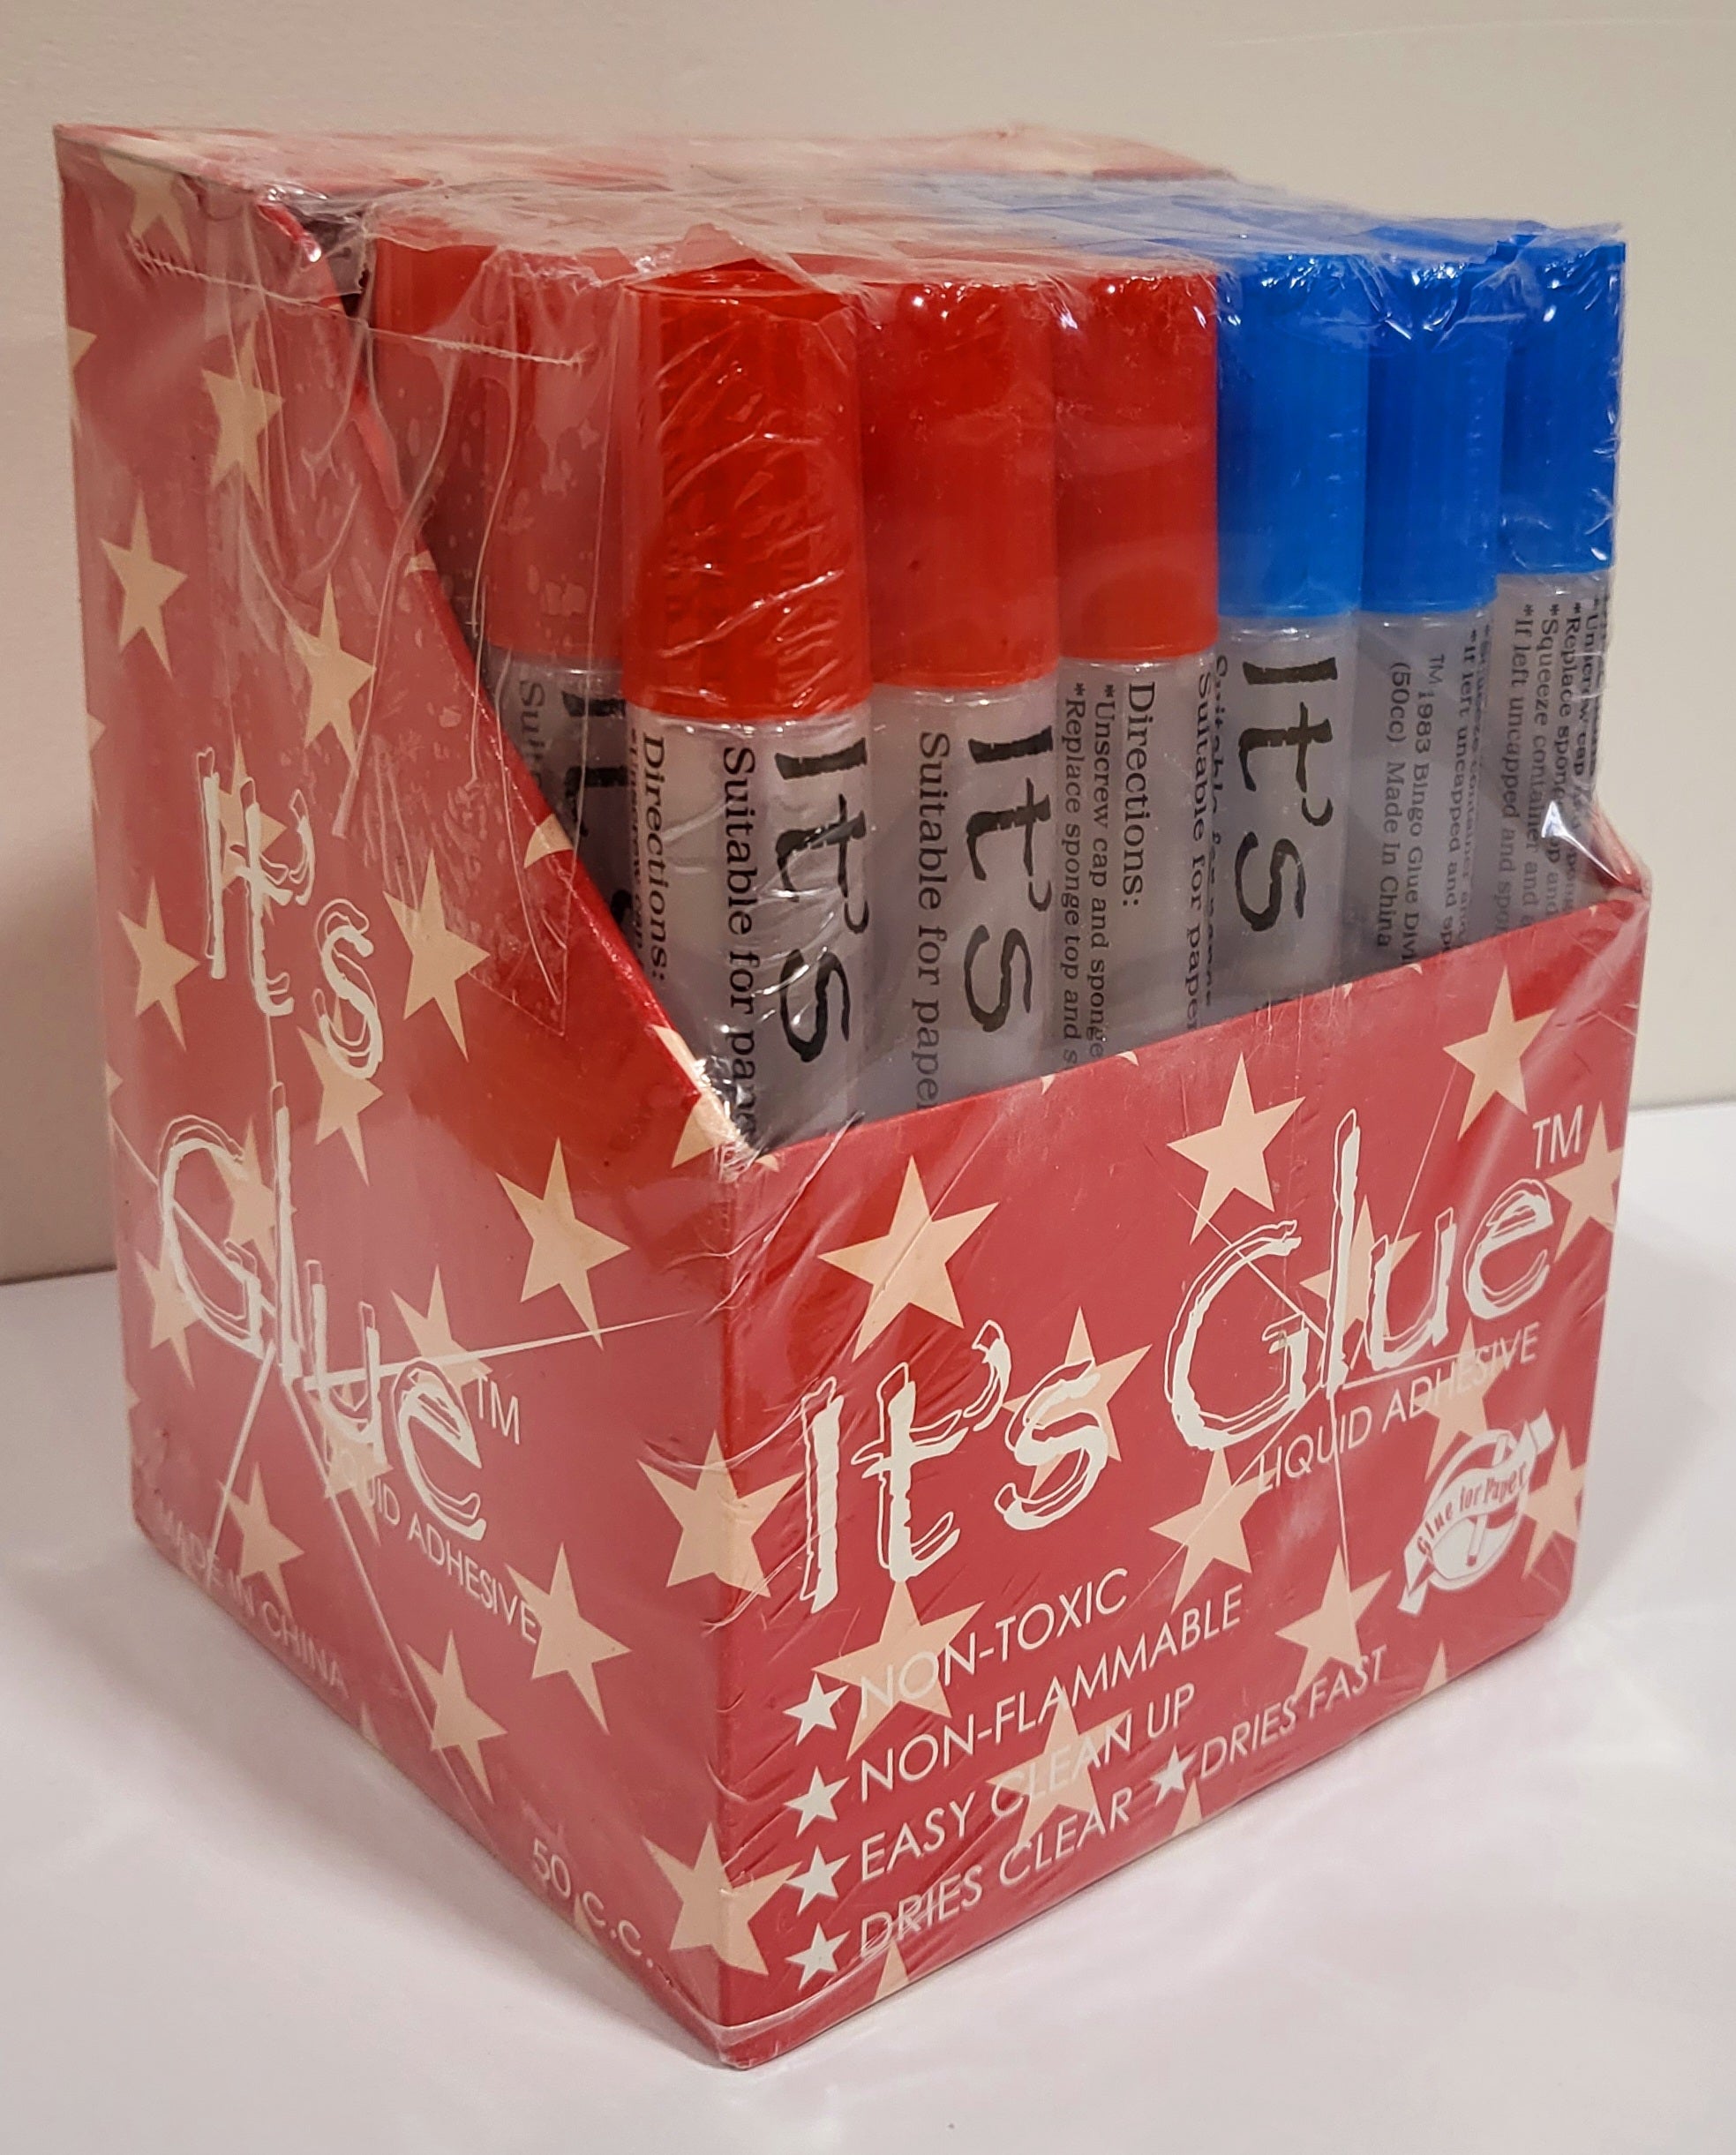 Glue Sticks - 36 count box